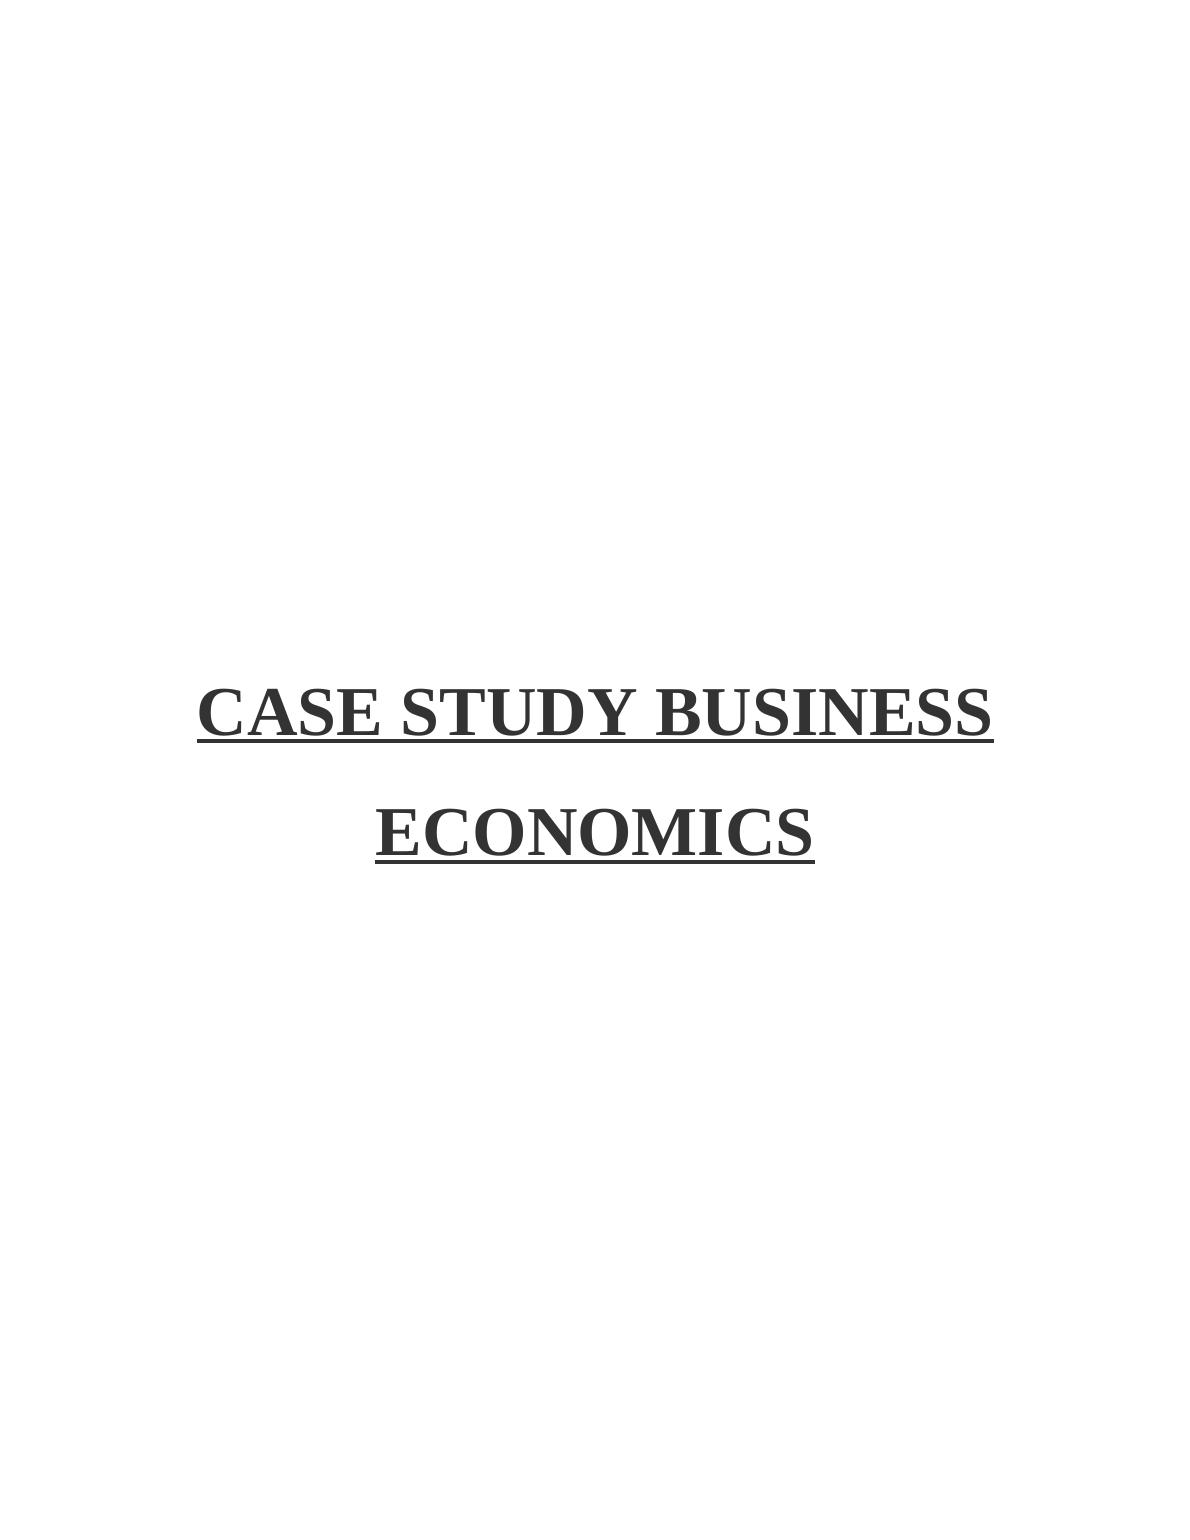 Case Studies in Business Economics_1